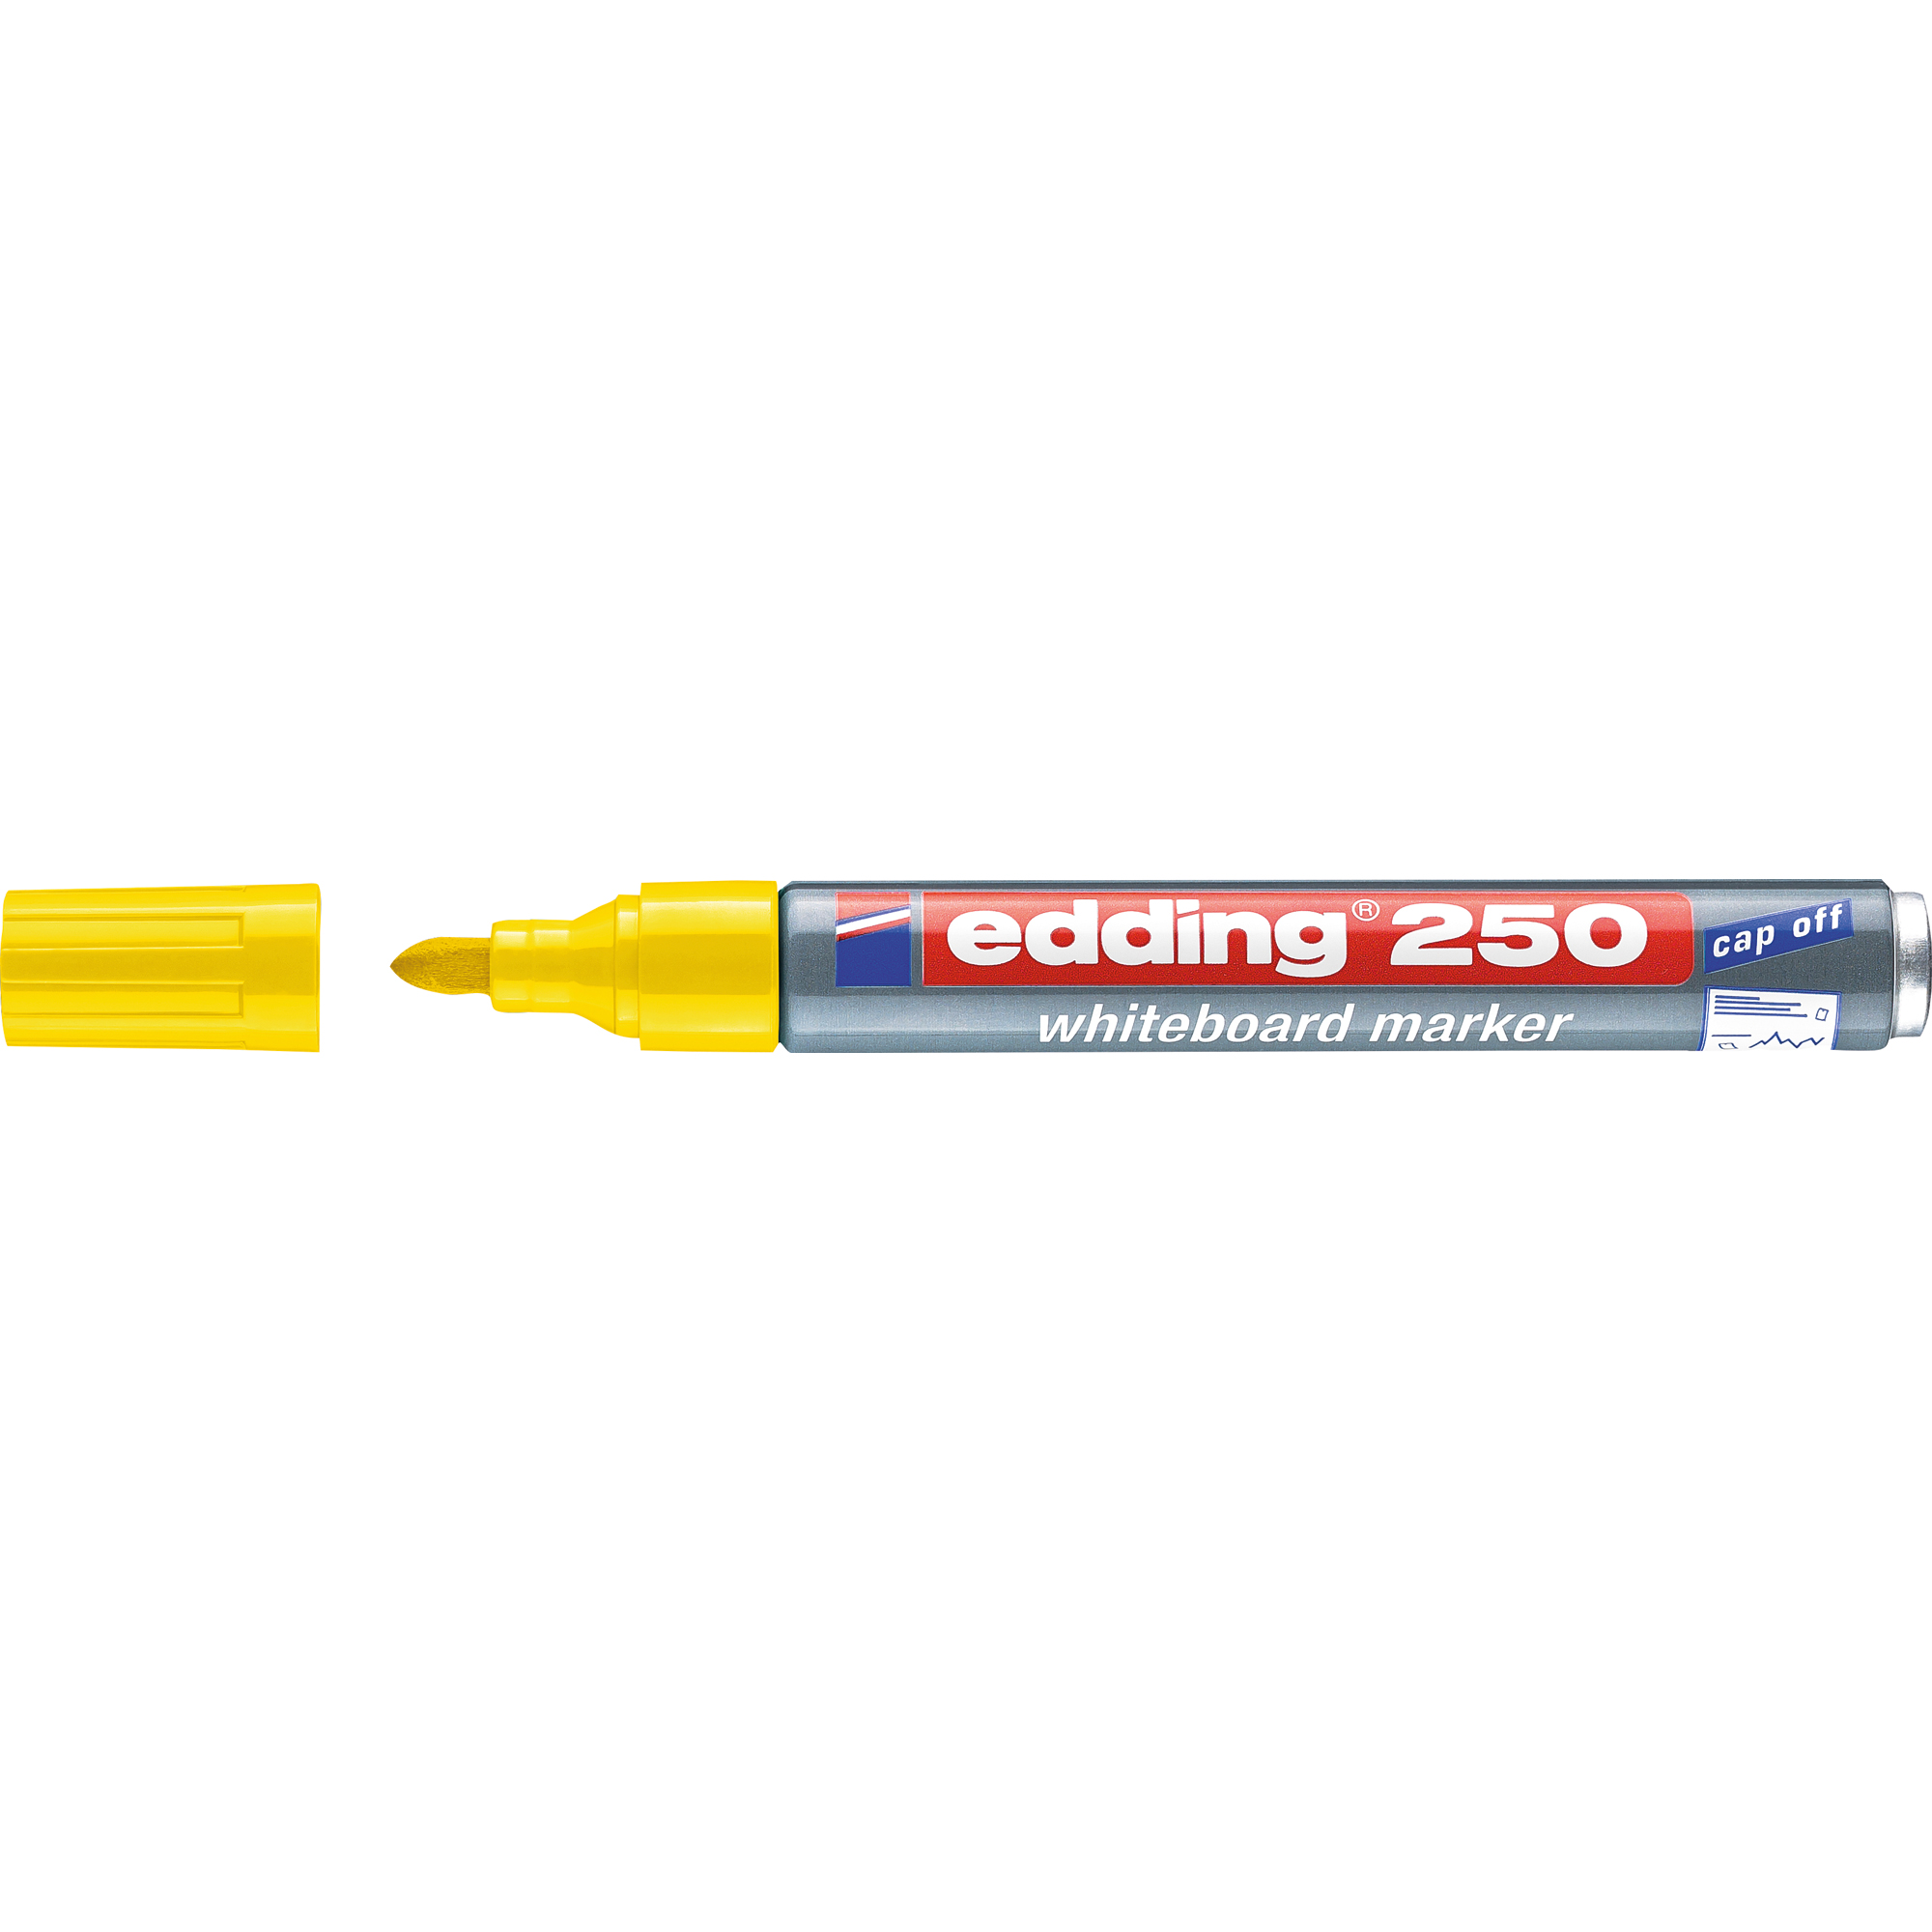 Whiteboardmarker, Boardmarker gelb 1,5-3mm nachfüllbar EDDING Rundspitze 250